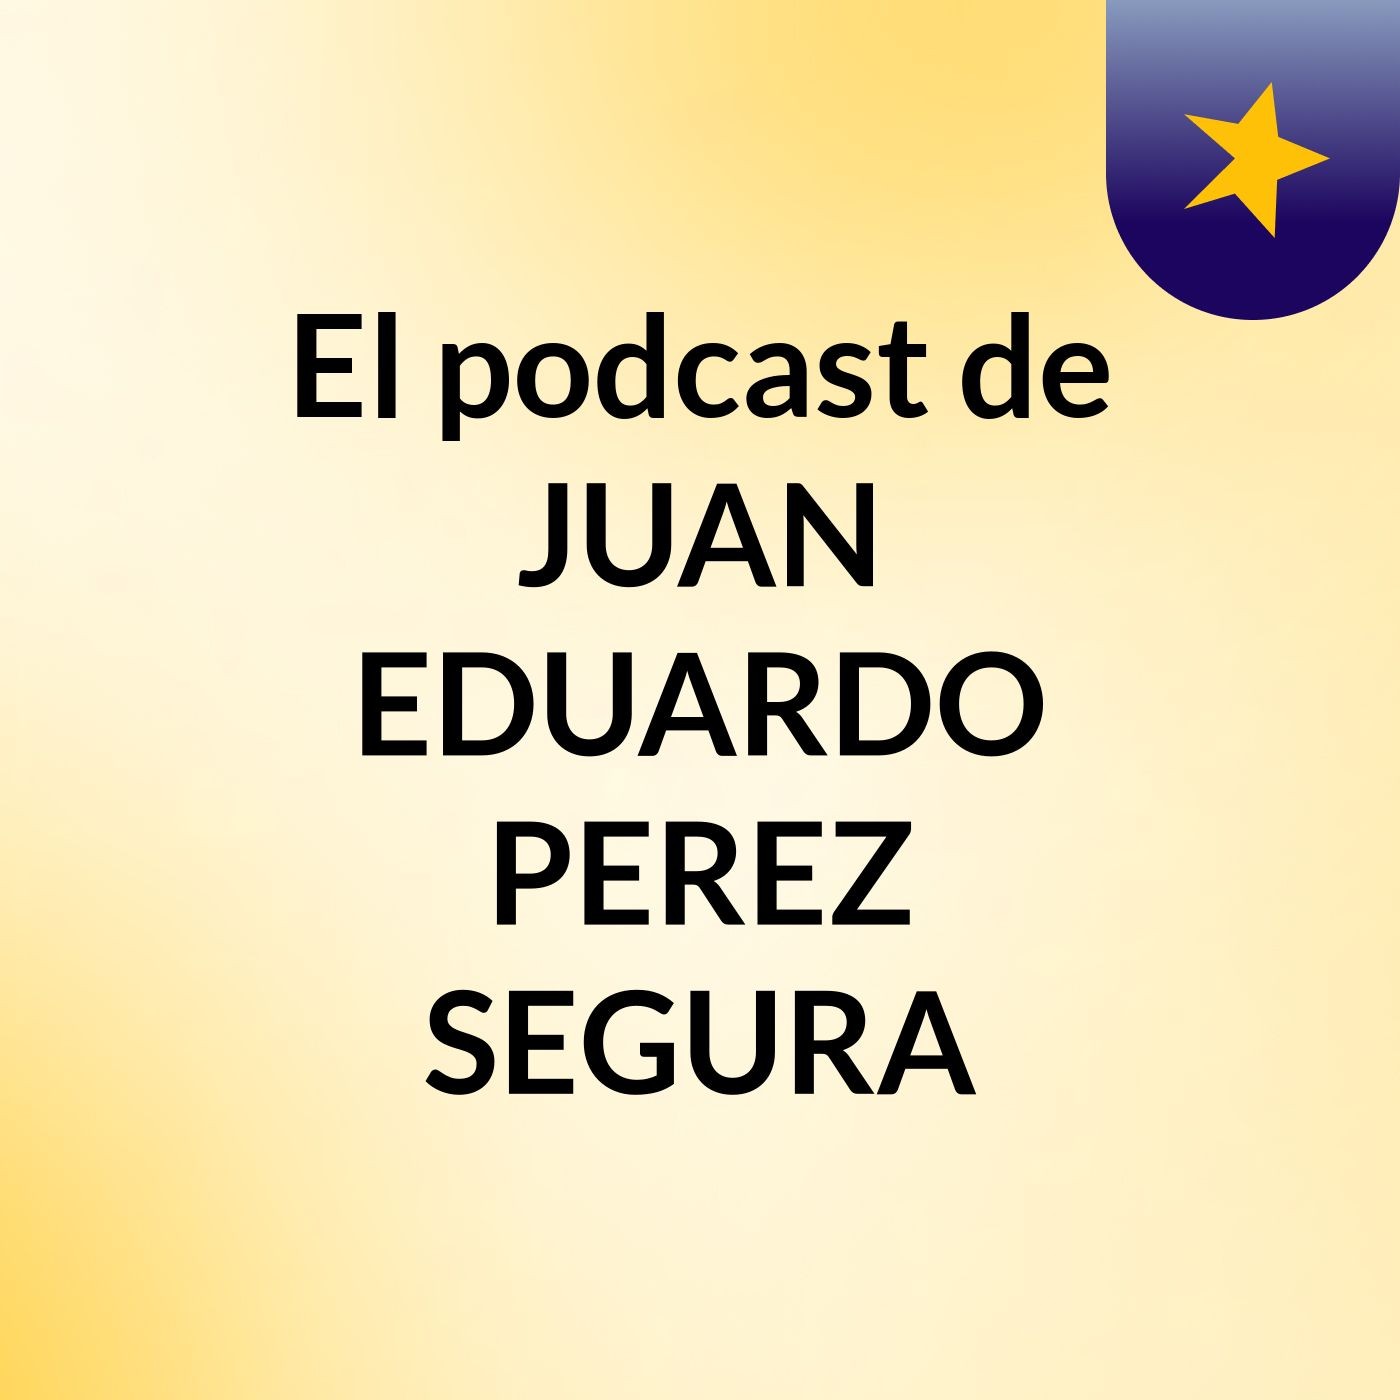 Episodio 2 - El podcast de JUAN EDUARDO PEREZ SEGURA